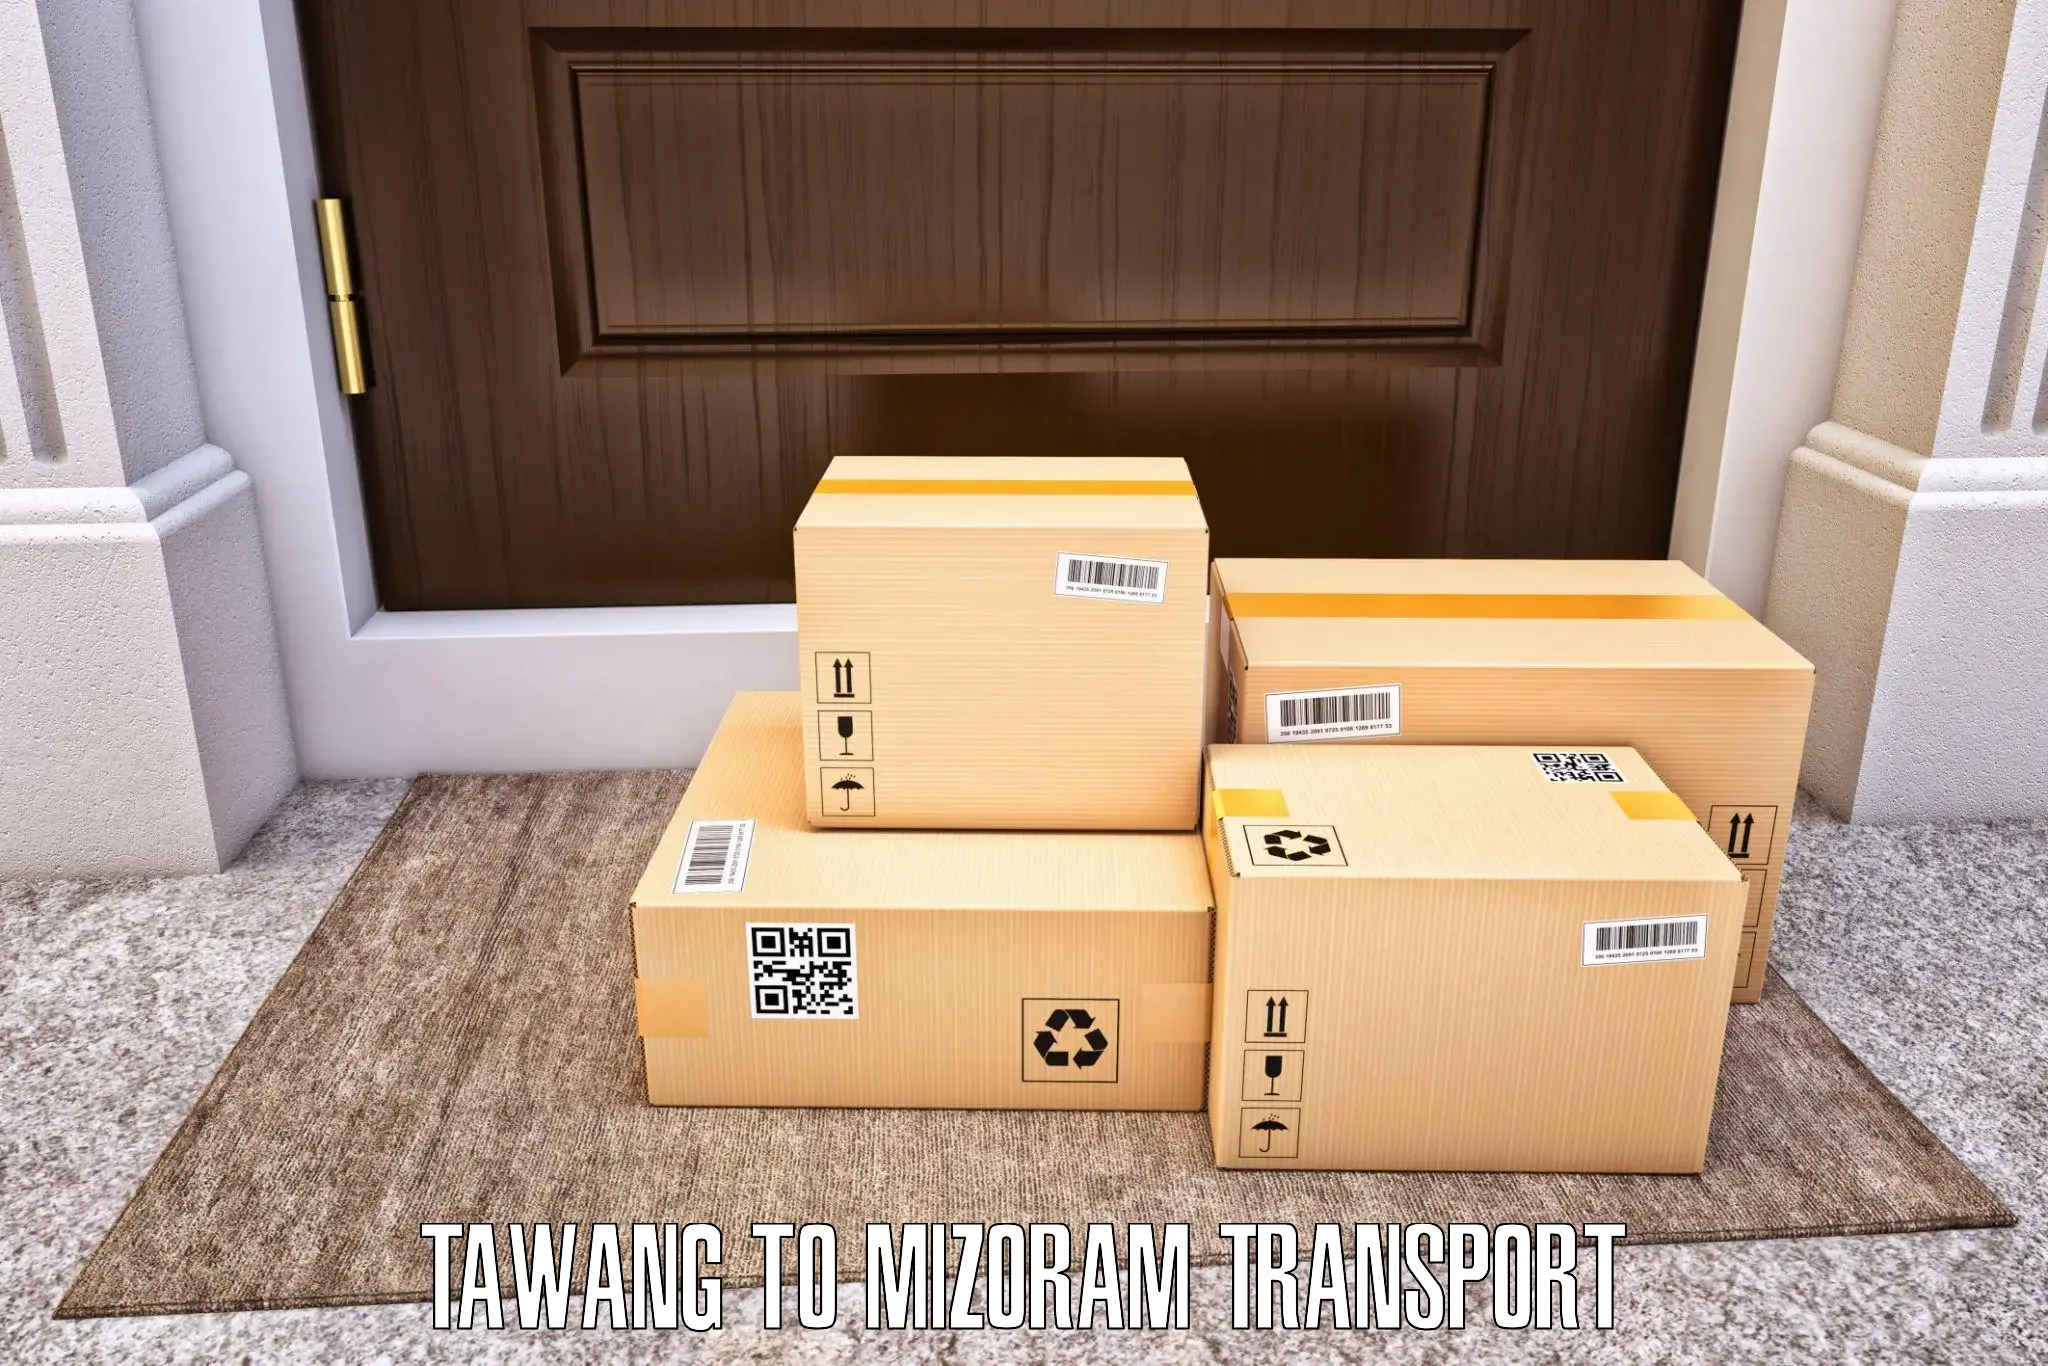 Vehicle transport services Tawang to Siaha